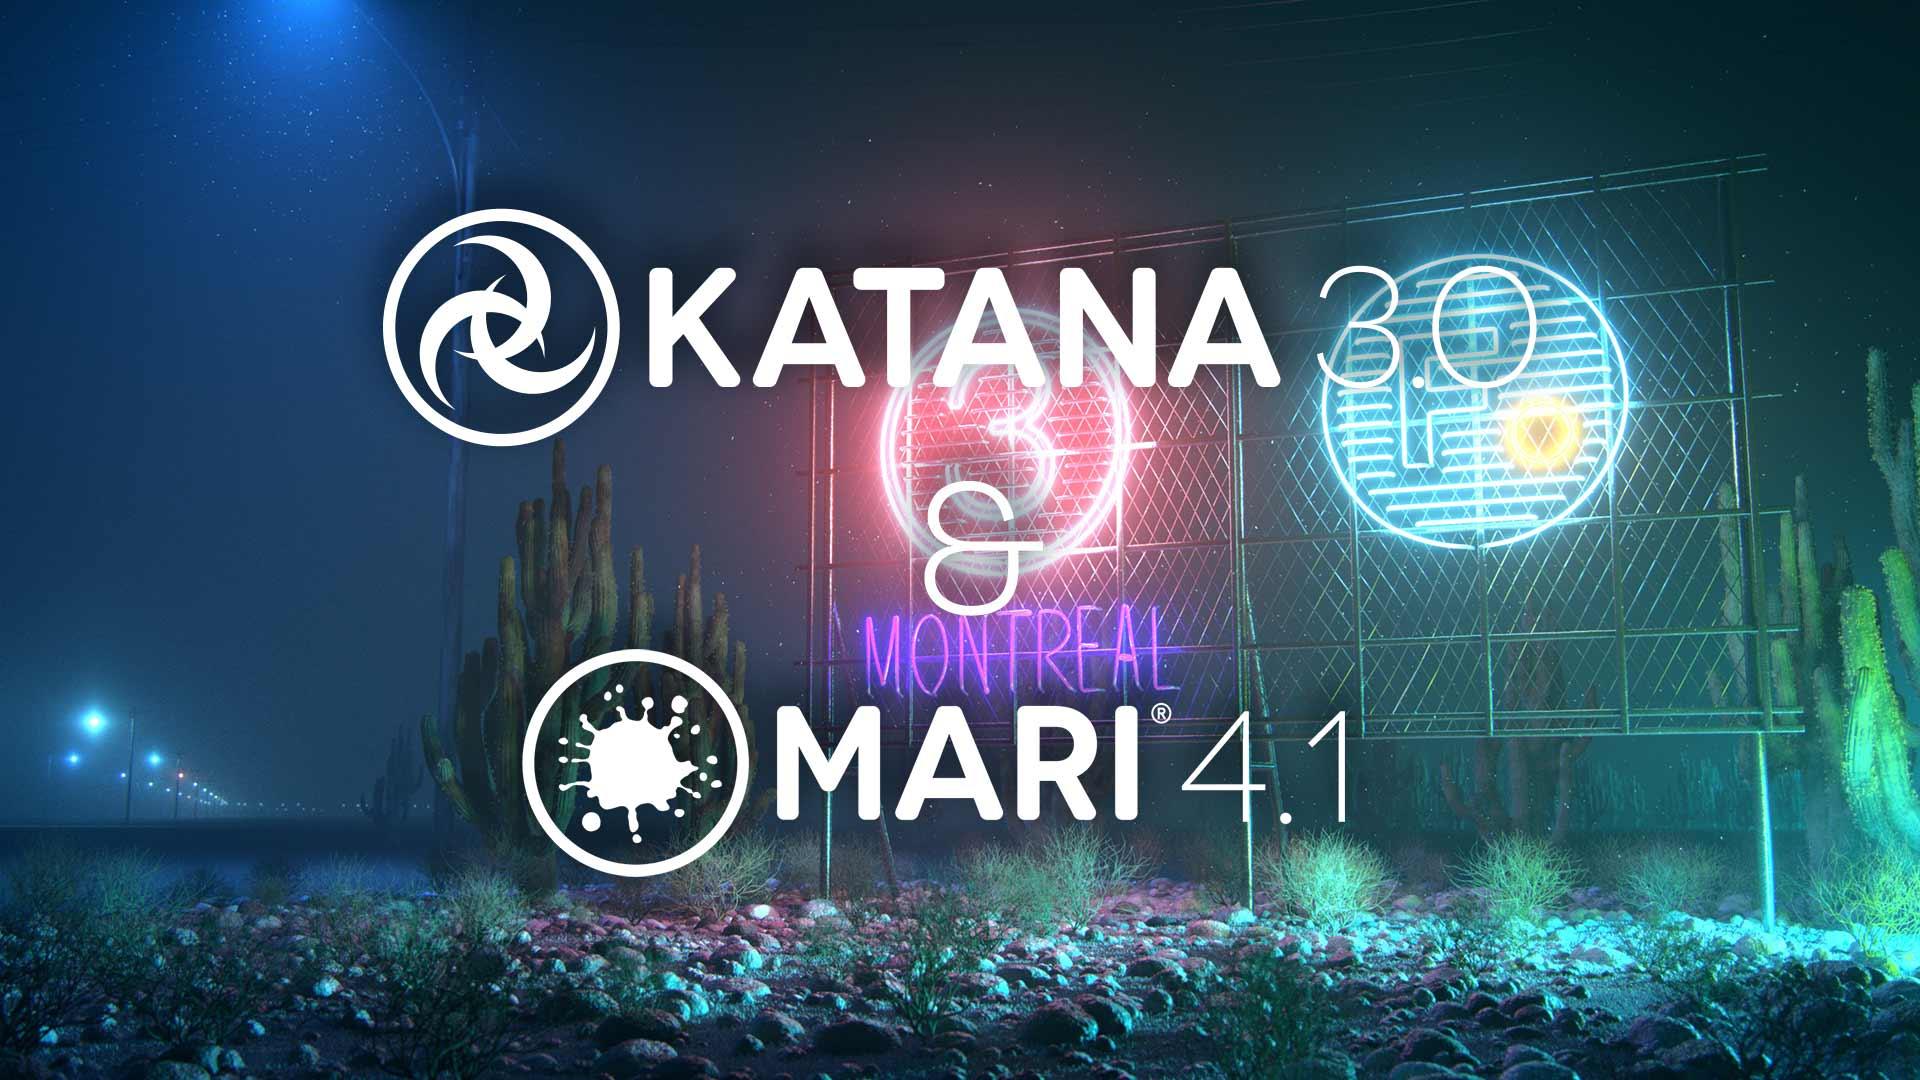 Katana 3.0 and Mari 4.1 